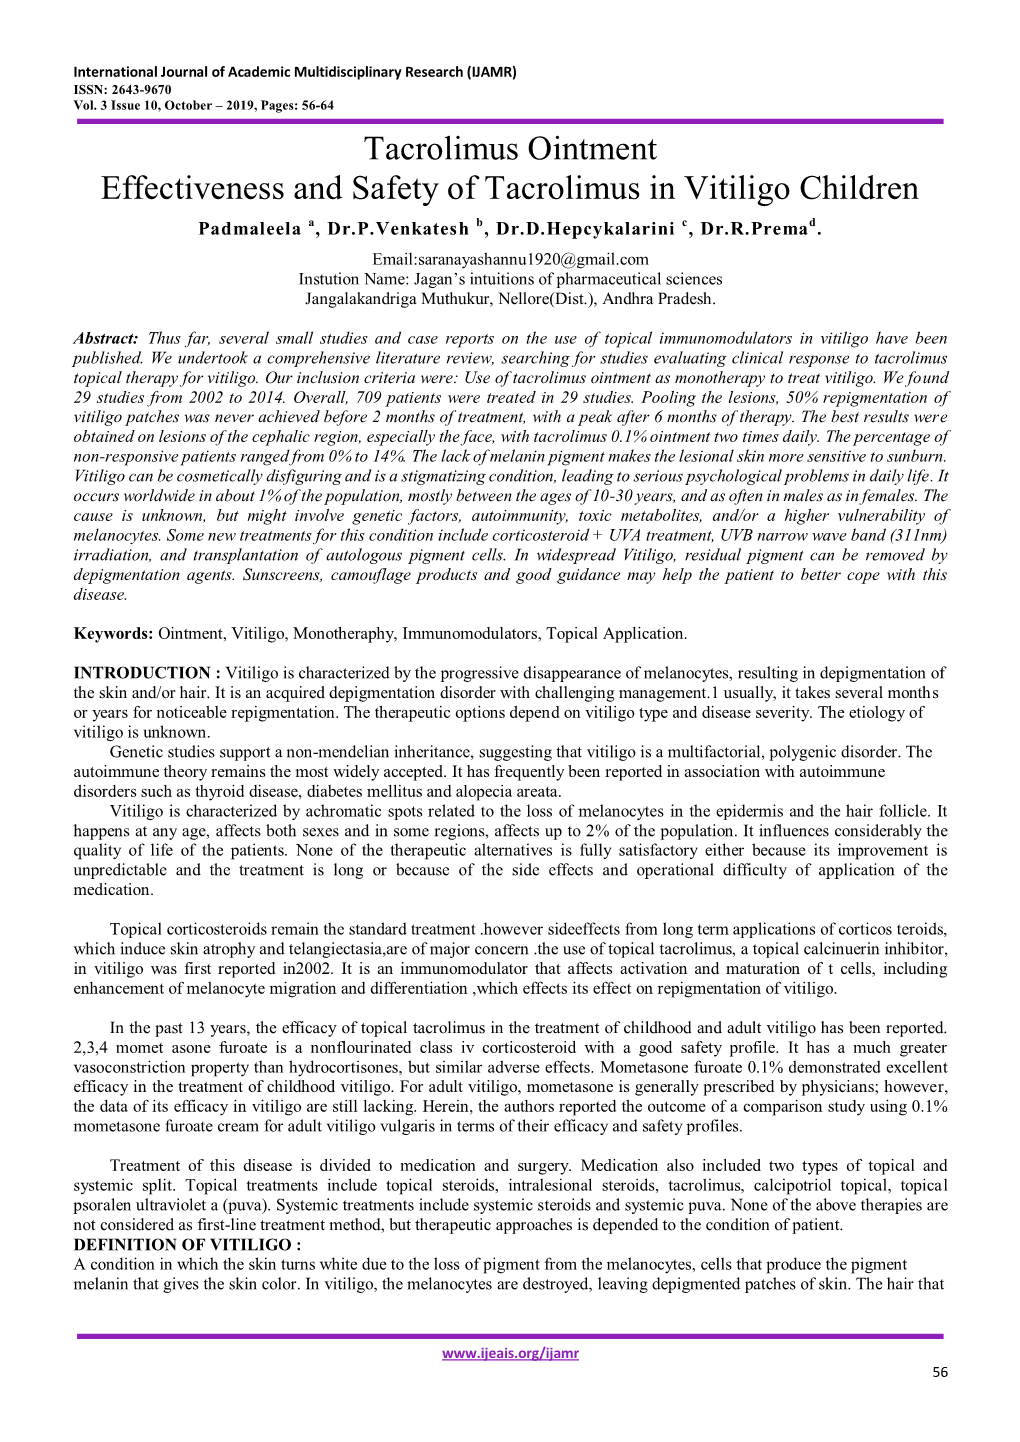 Tacrolimus Ointment Effectiveness and Safety of Tacrolimus in Vitiligo Children Padmaleela A, Dr.P.Venkatesh B, Dr.D.Hepcykalarini C, Dr.R.Premad